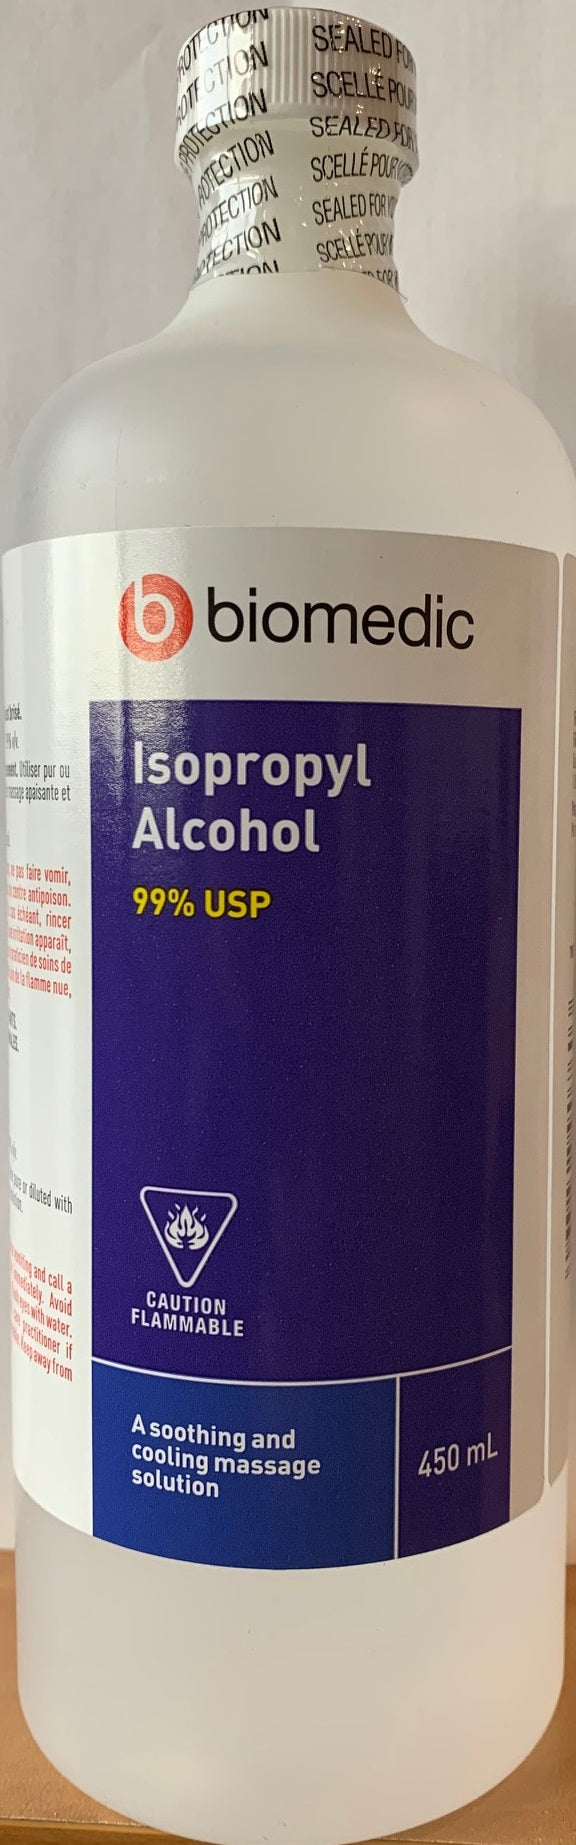 Biomedic Isopropyl Alcohol 99%